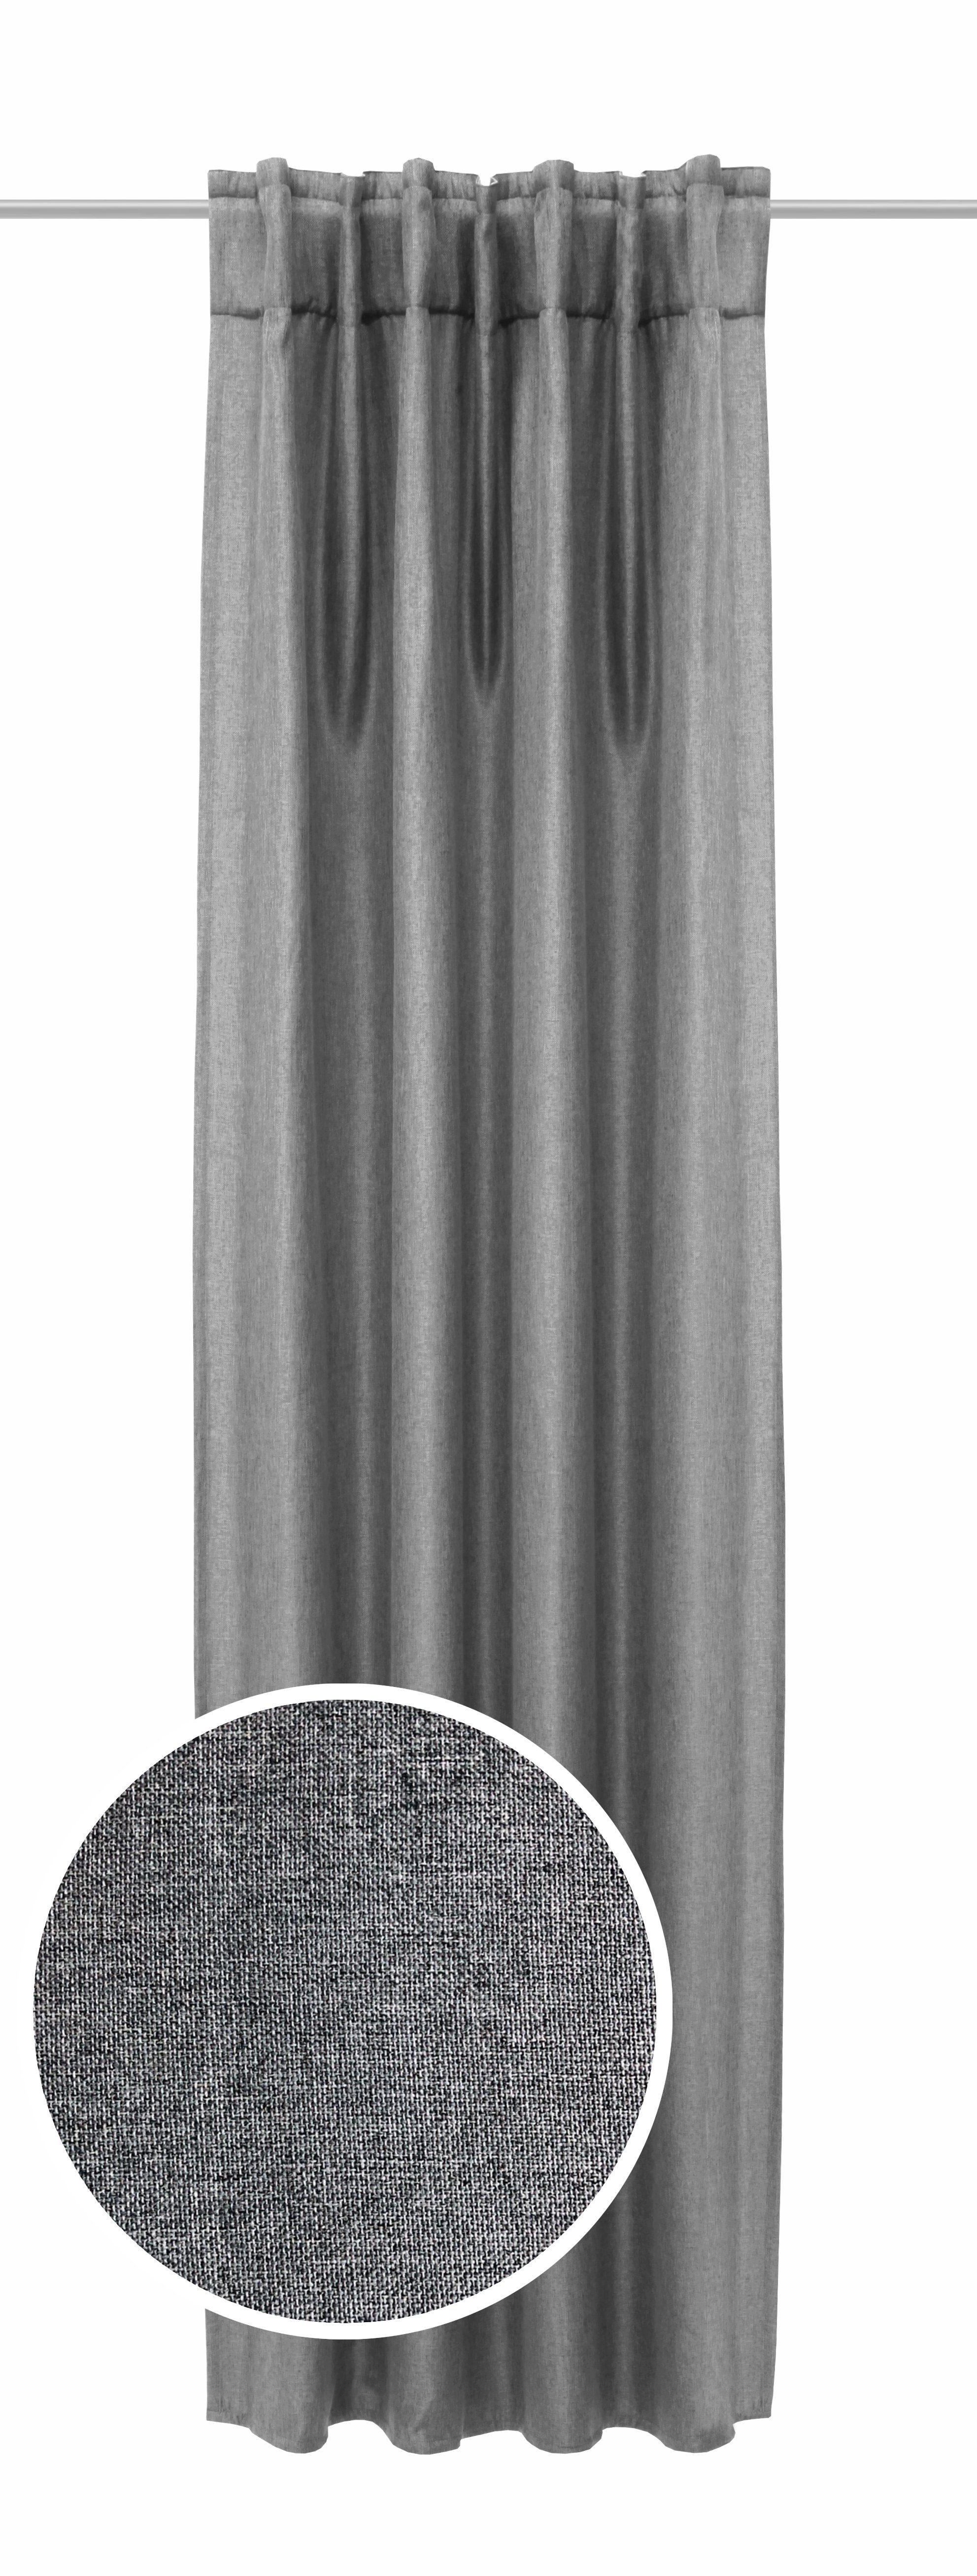 Verdunkelungsvorhang Clever-Kauf-24, Vorhang Jolie Verdunkelungsvorhang Leinenoptik, verdunkelnder grau